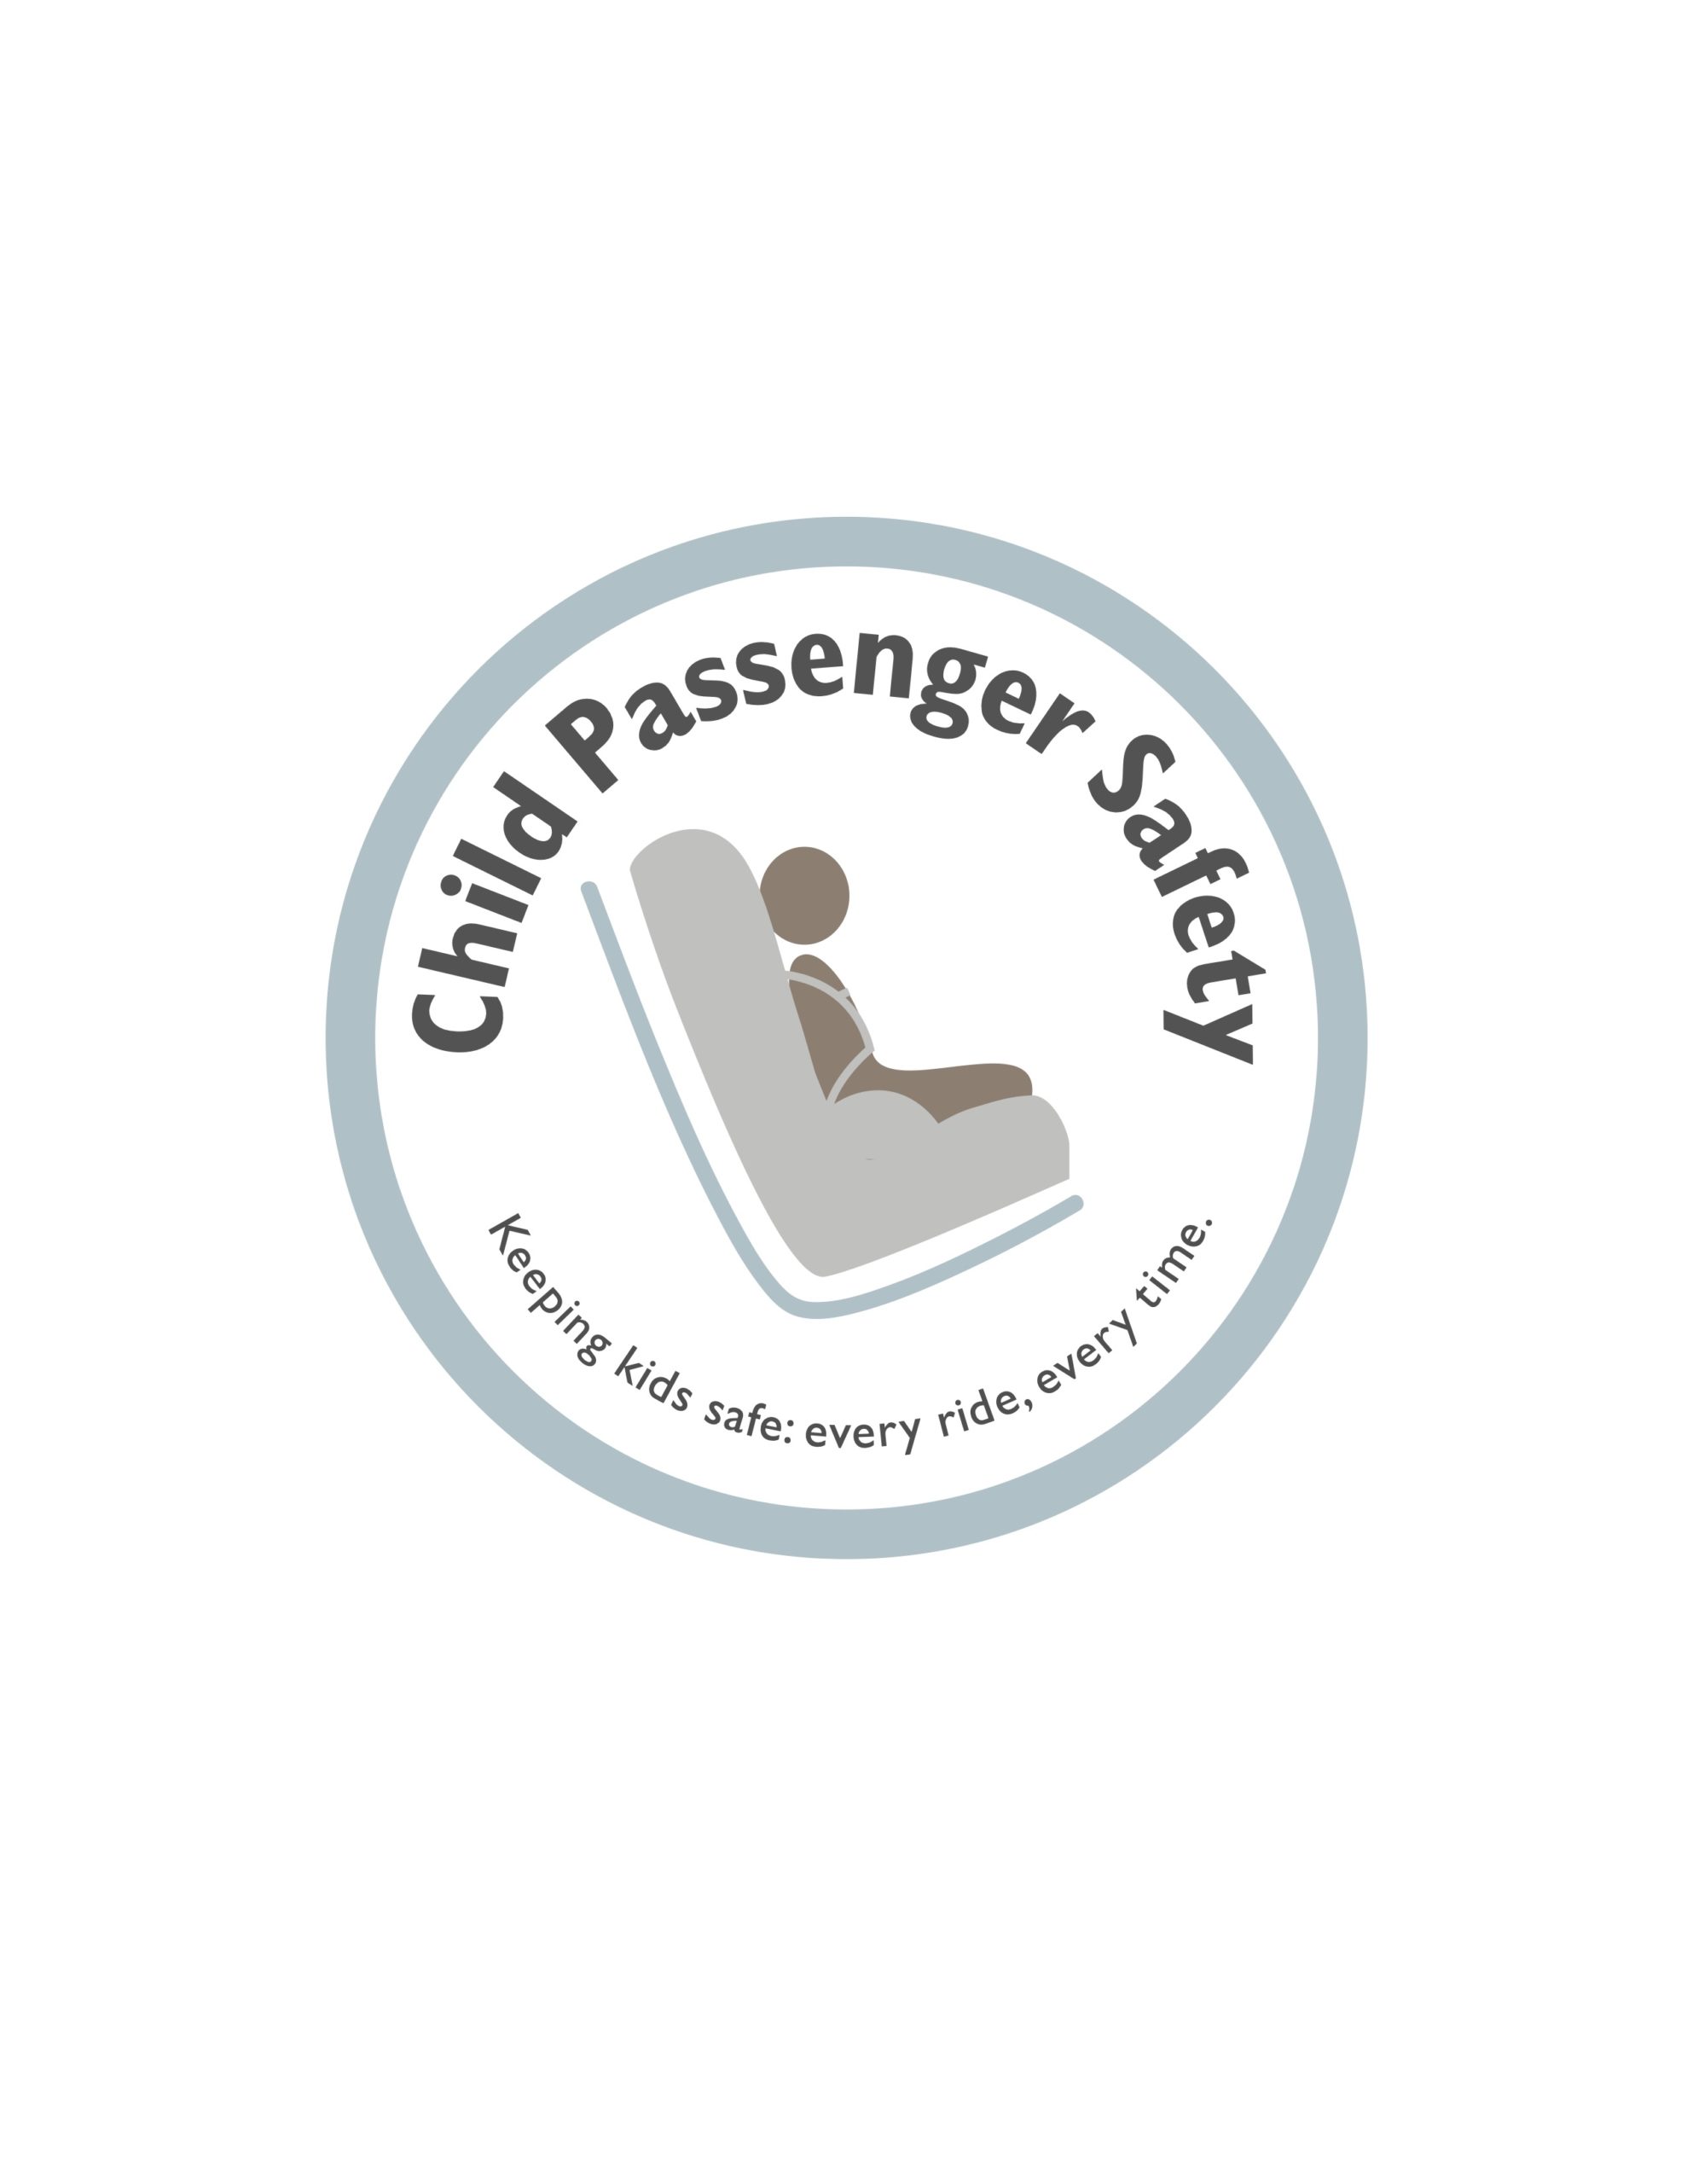 Child Passenger Safety Logo